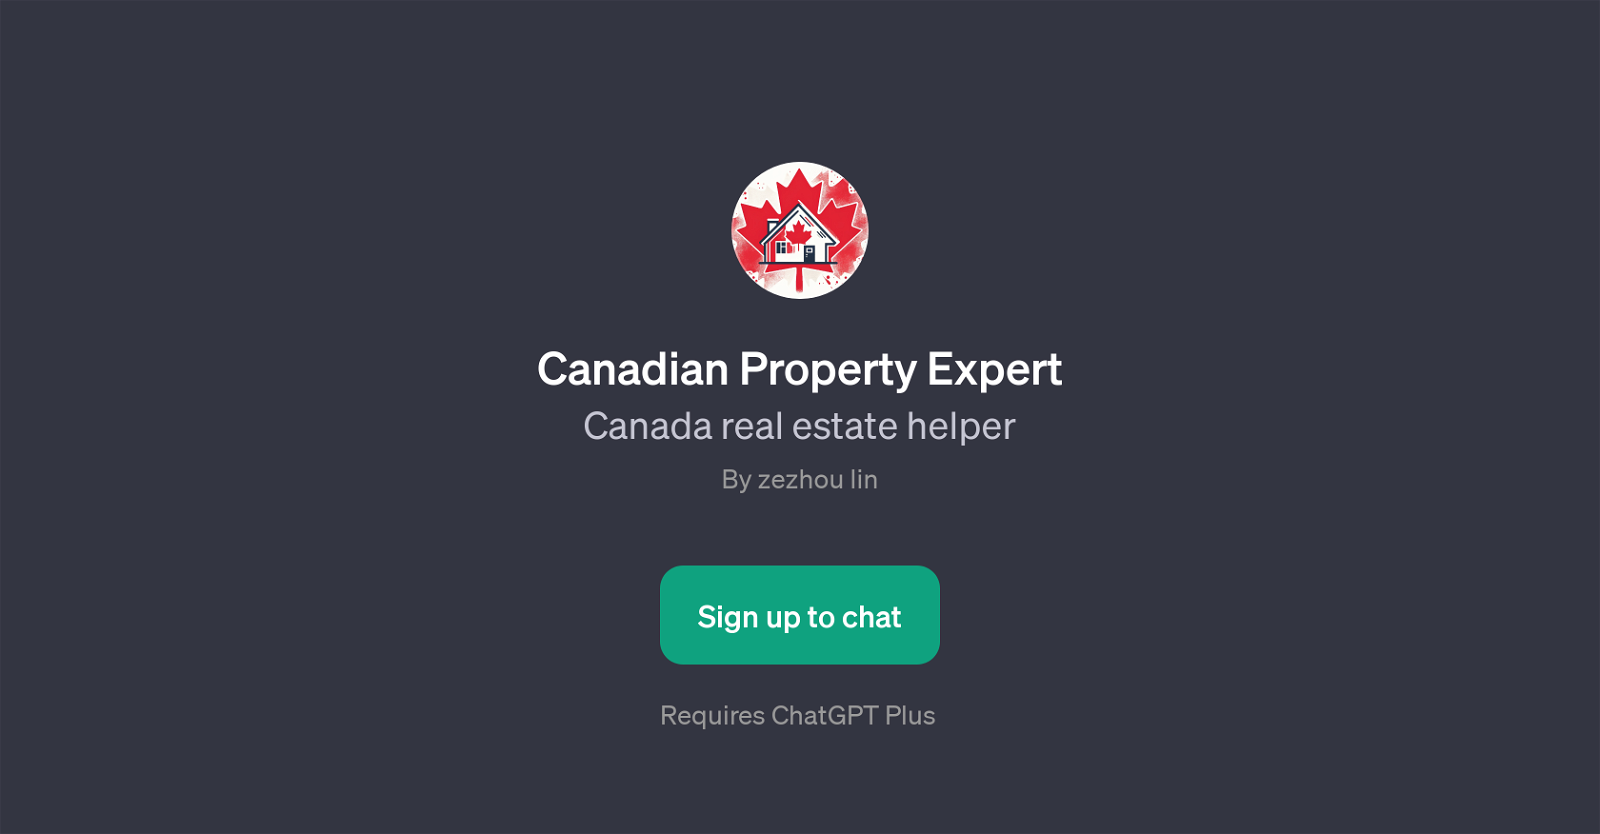 Canadian Property Expert website